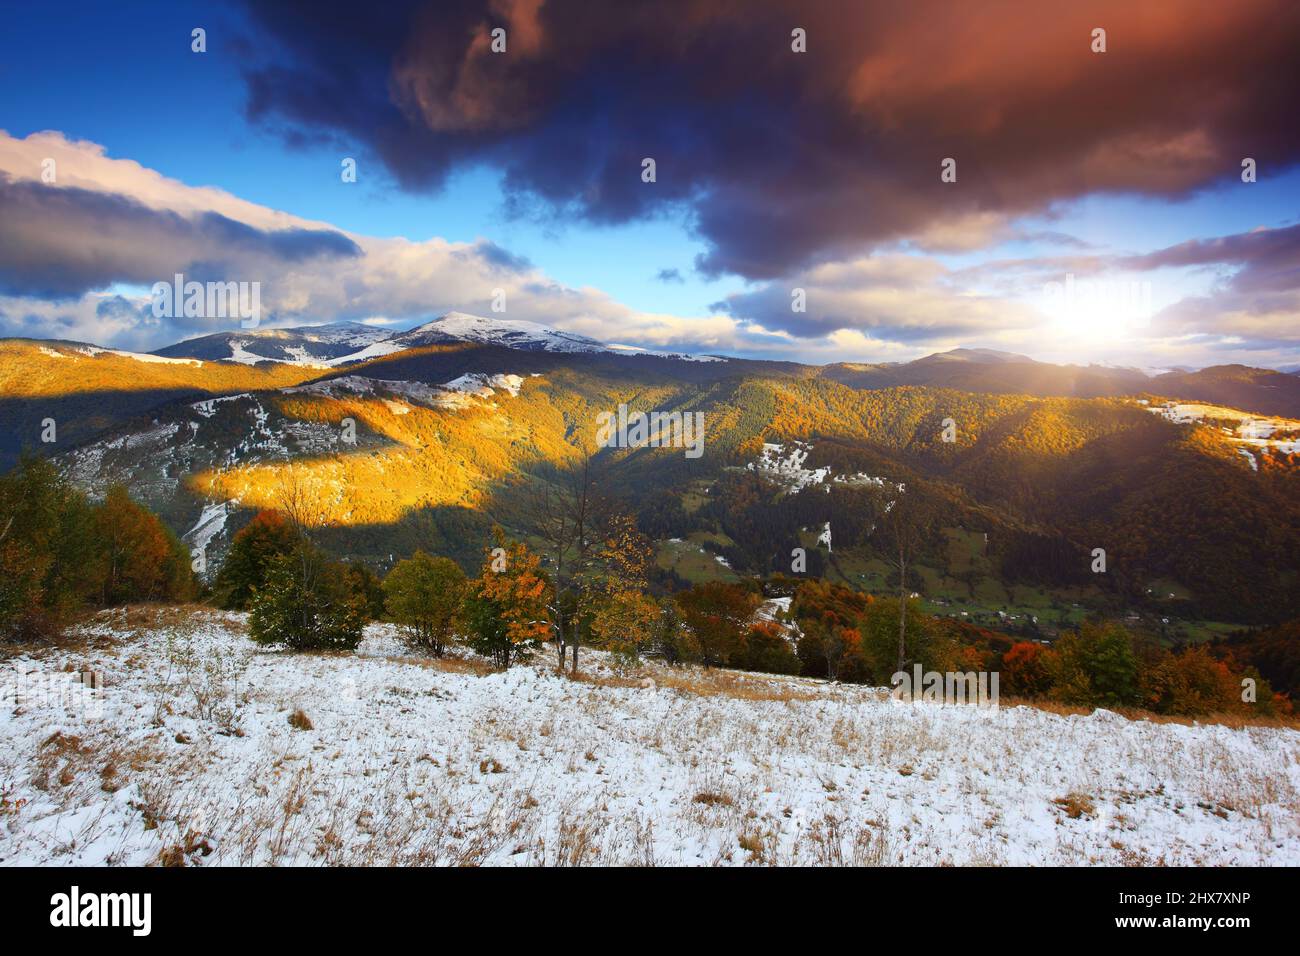 Fantastic morning mountain landscape. Colorful overcast sky. Carpathian, Ukraine, Europe. Beauty world. Stock Photo